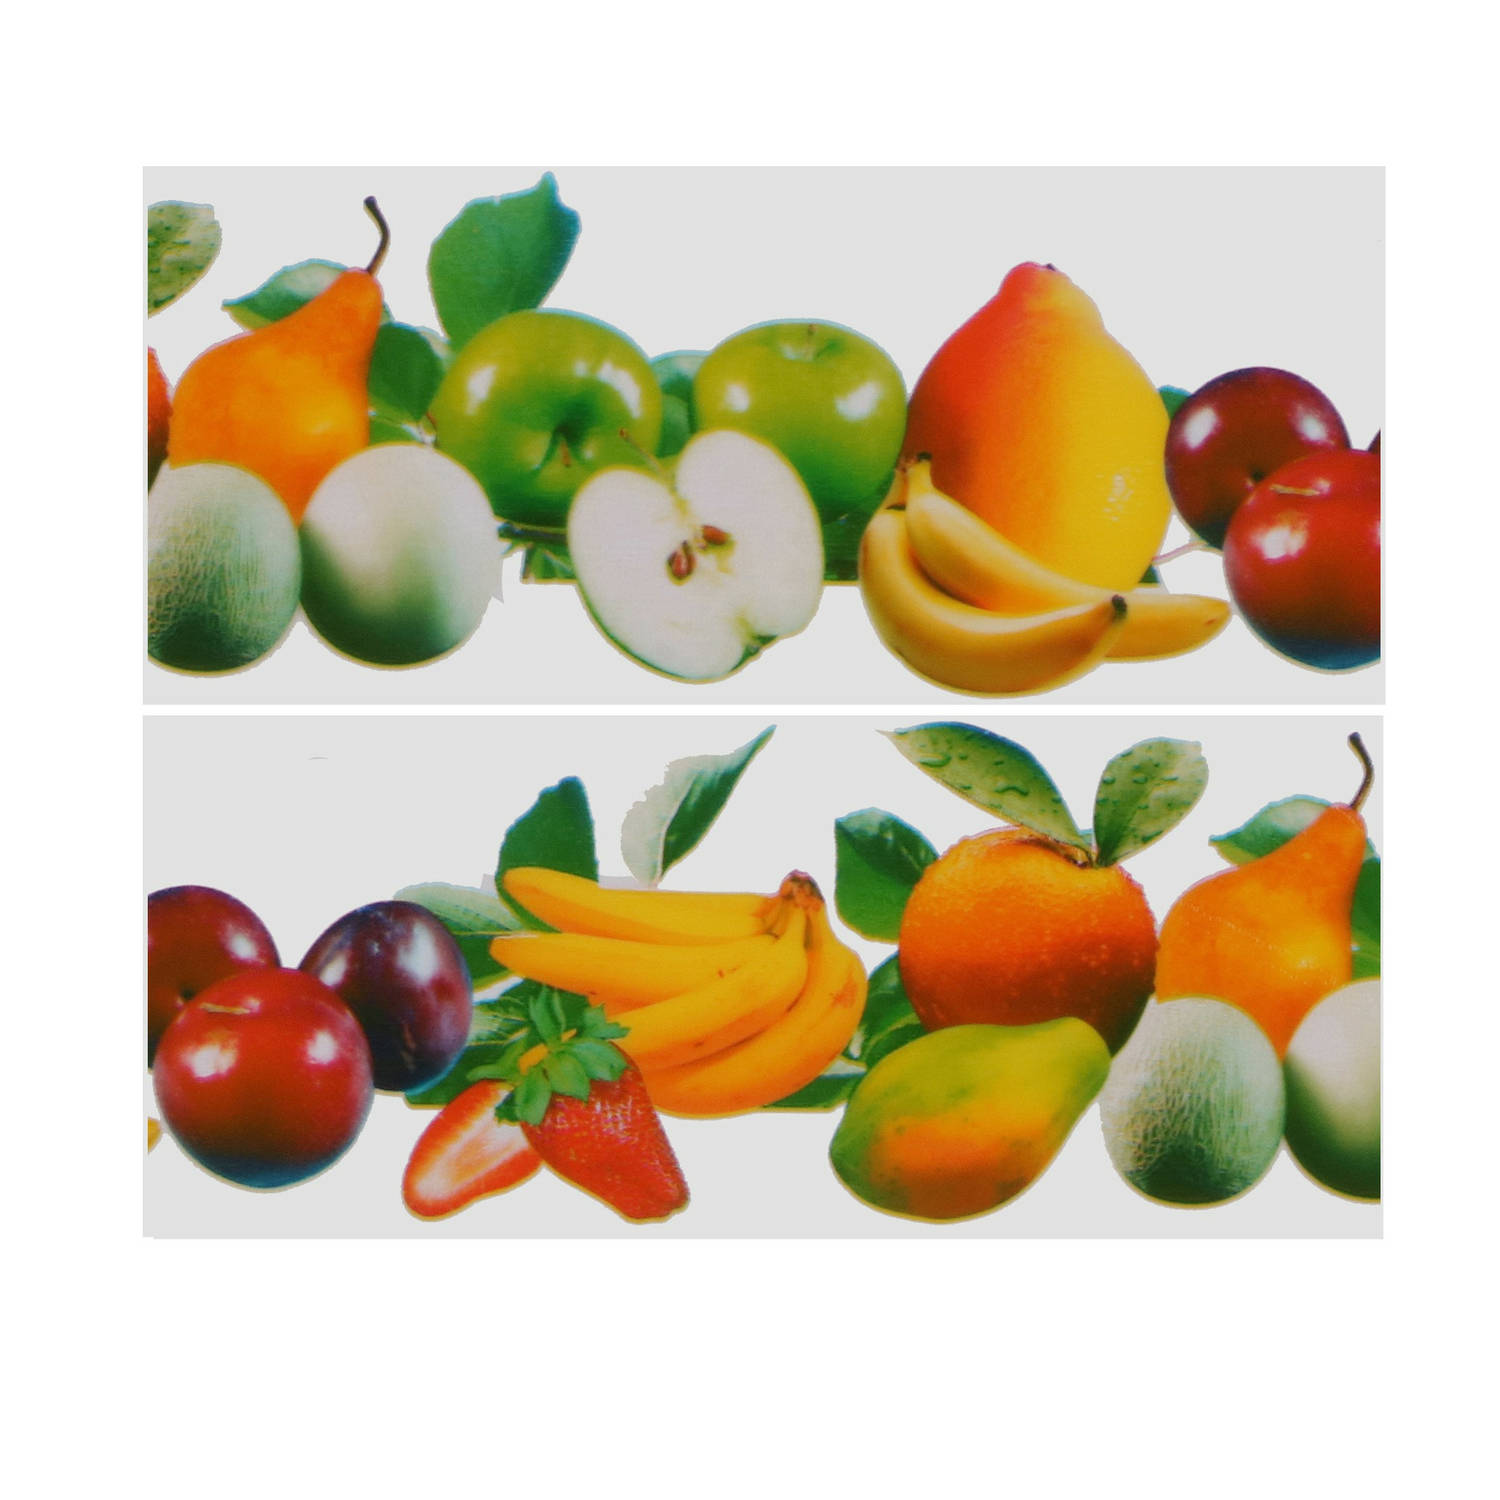 Sunnydays Fruitvliegjes val fruit raamstickers - 3x stickers - ongedierte bestrijding